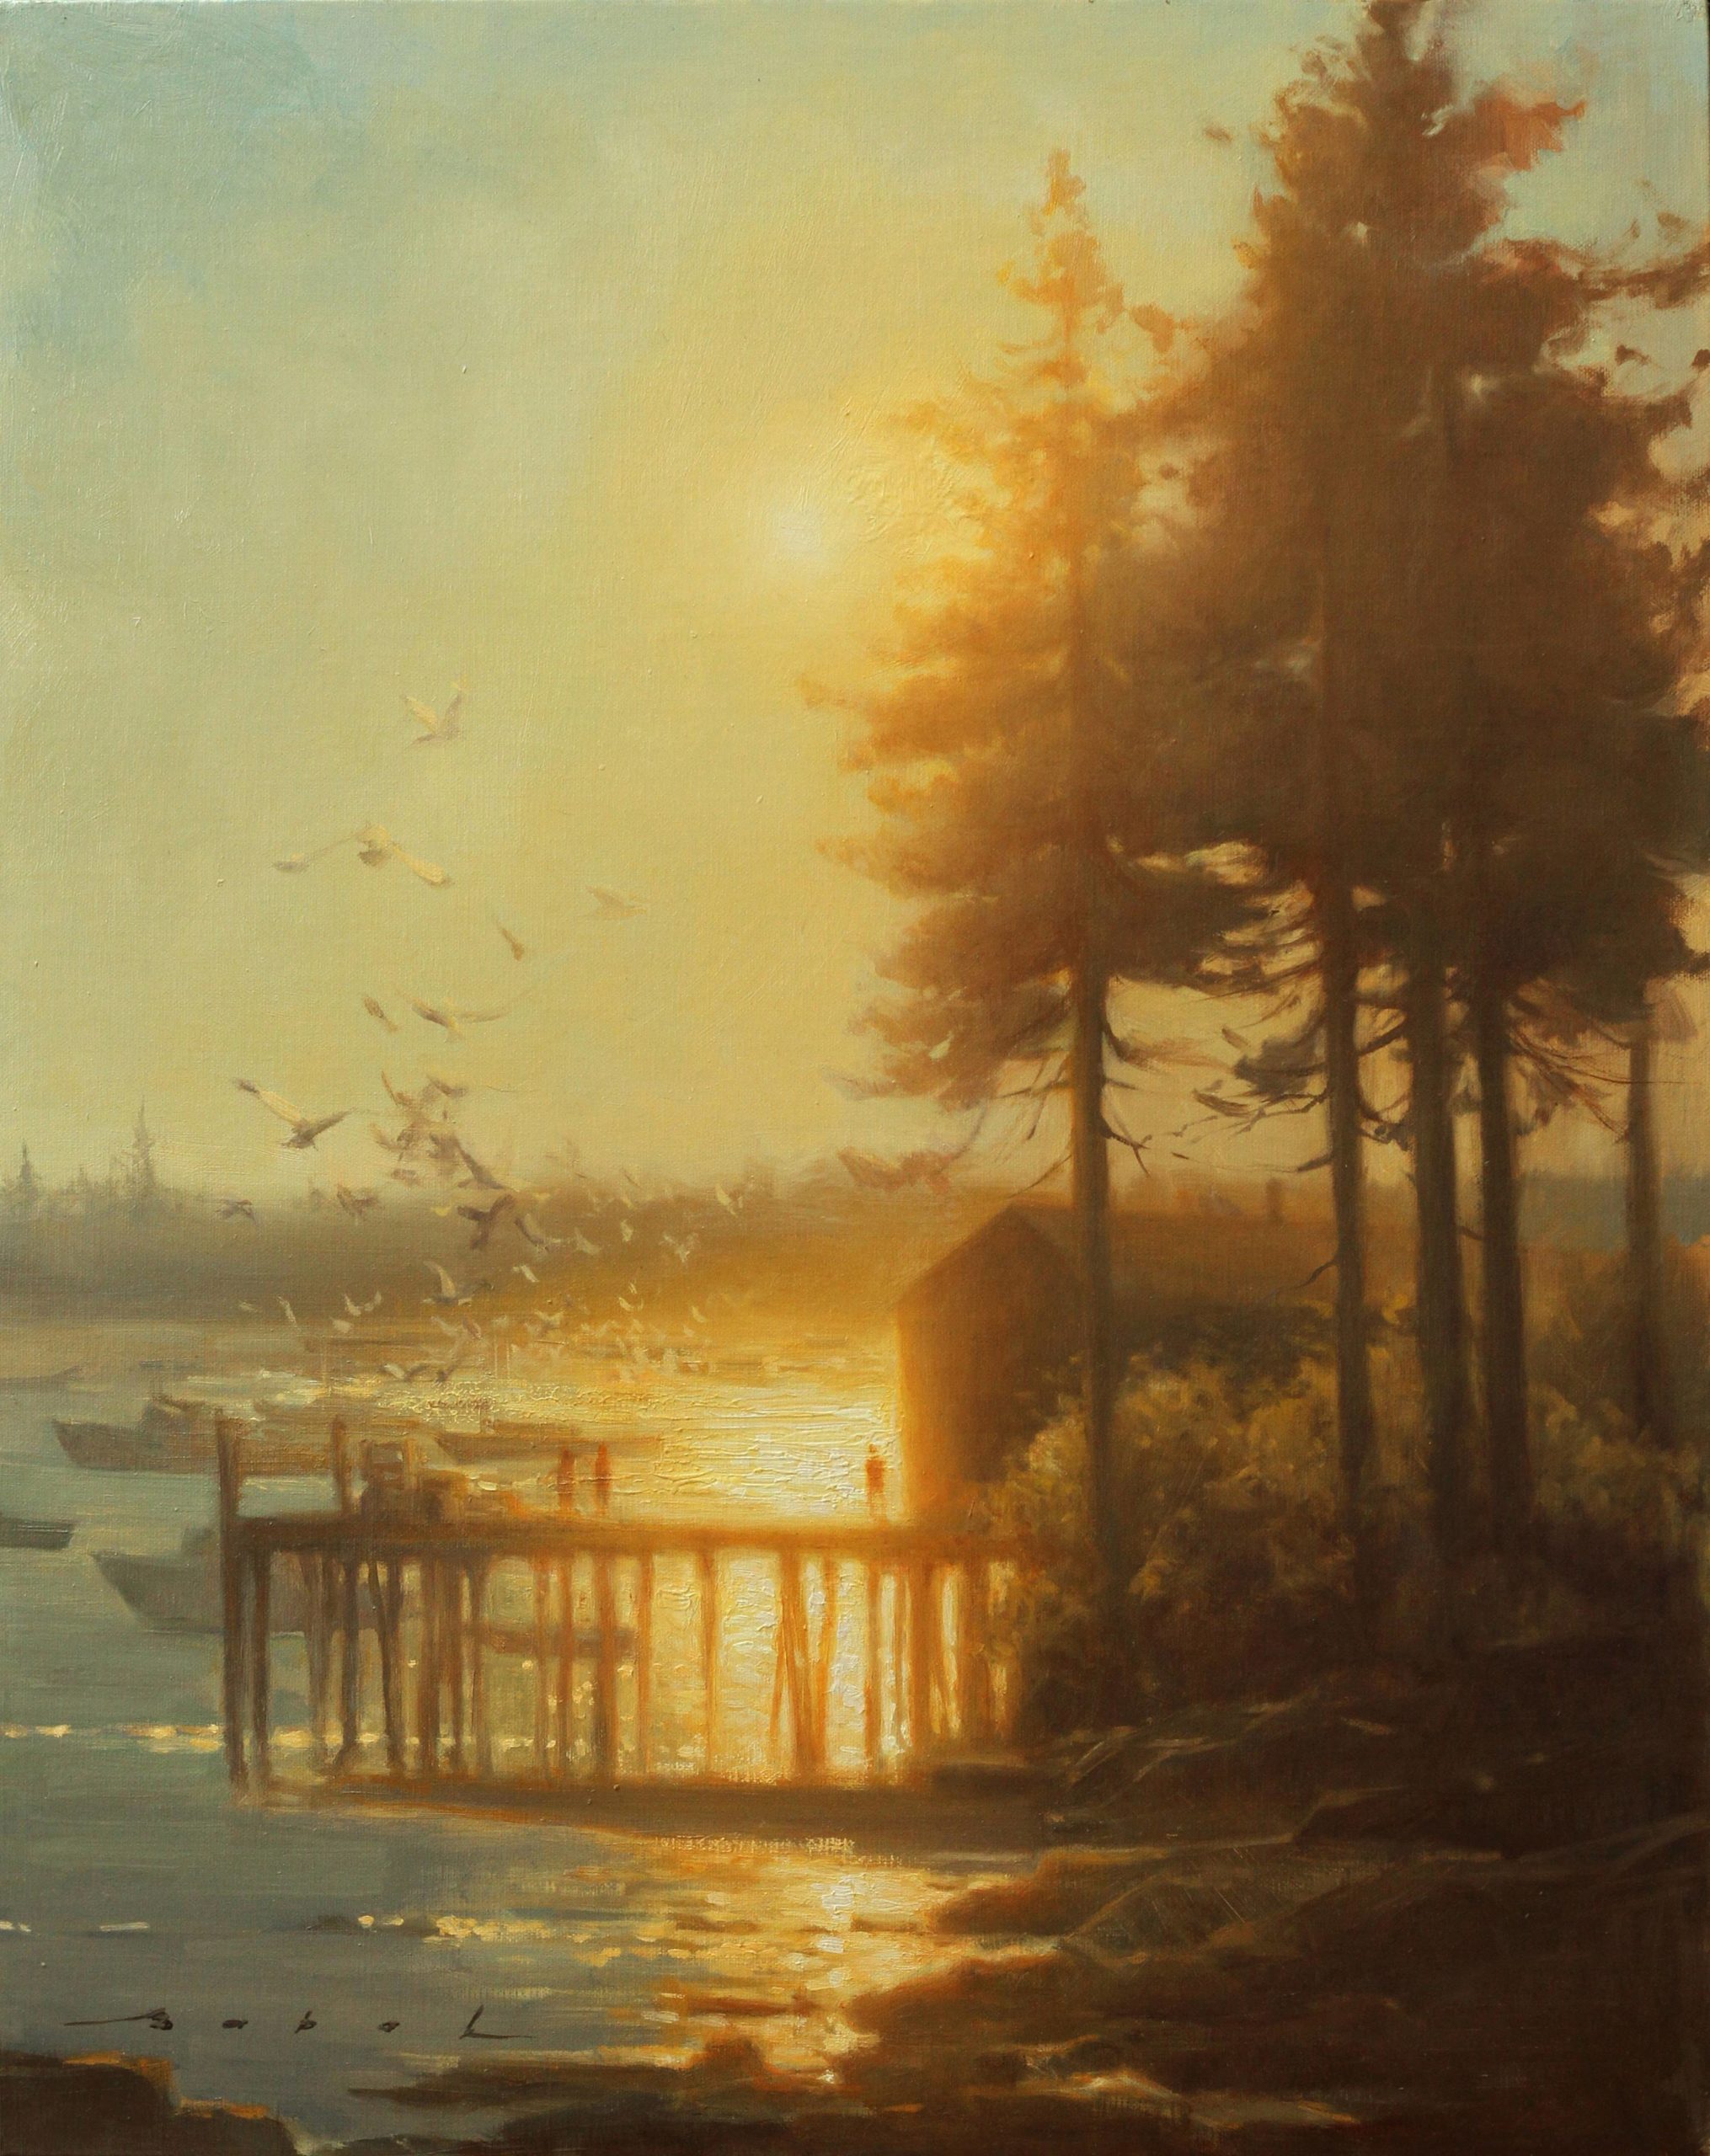 Painting on location - sunrise painting